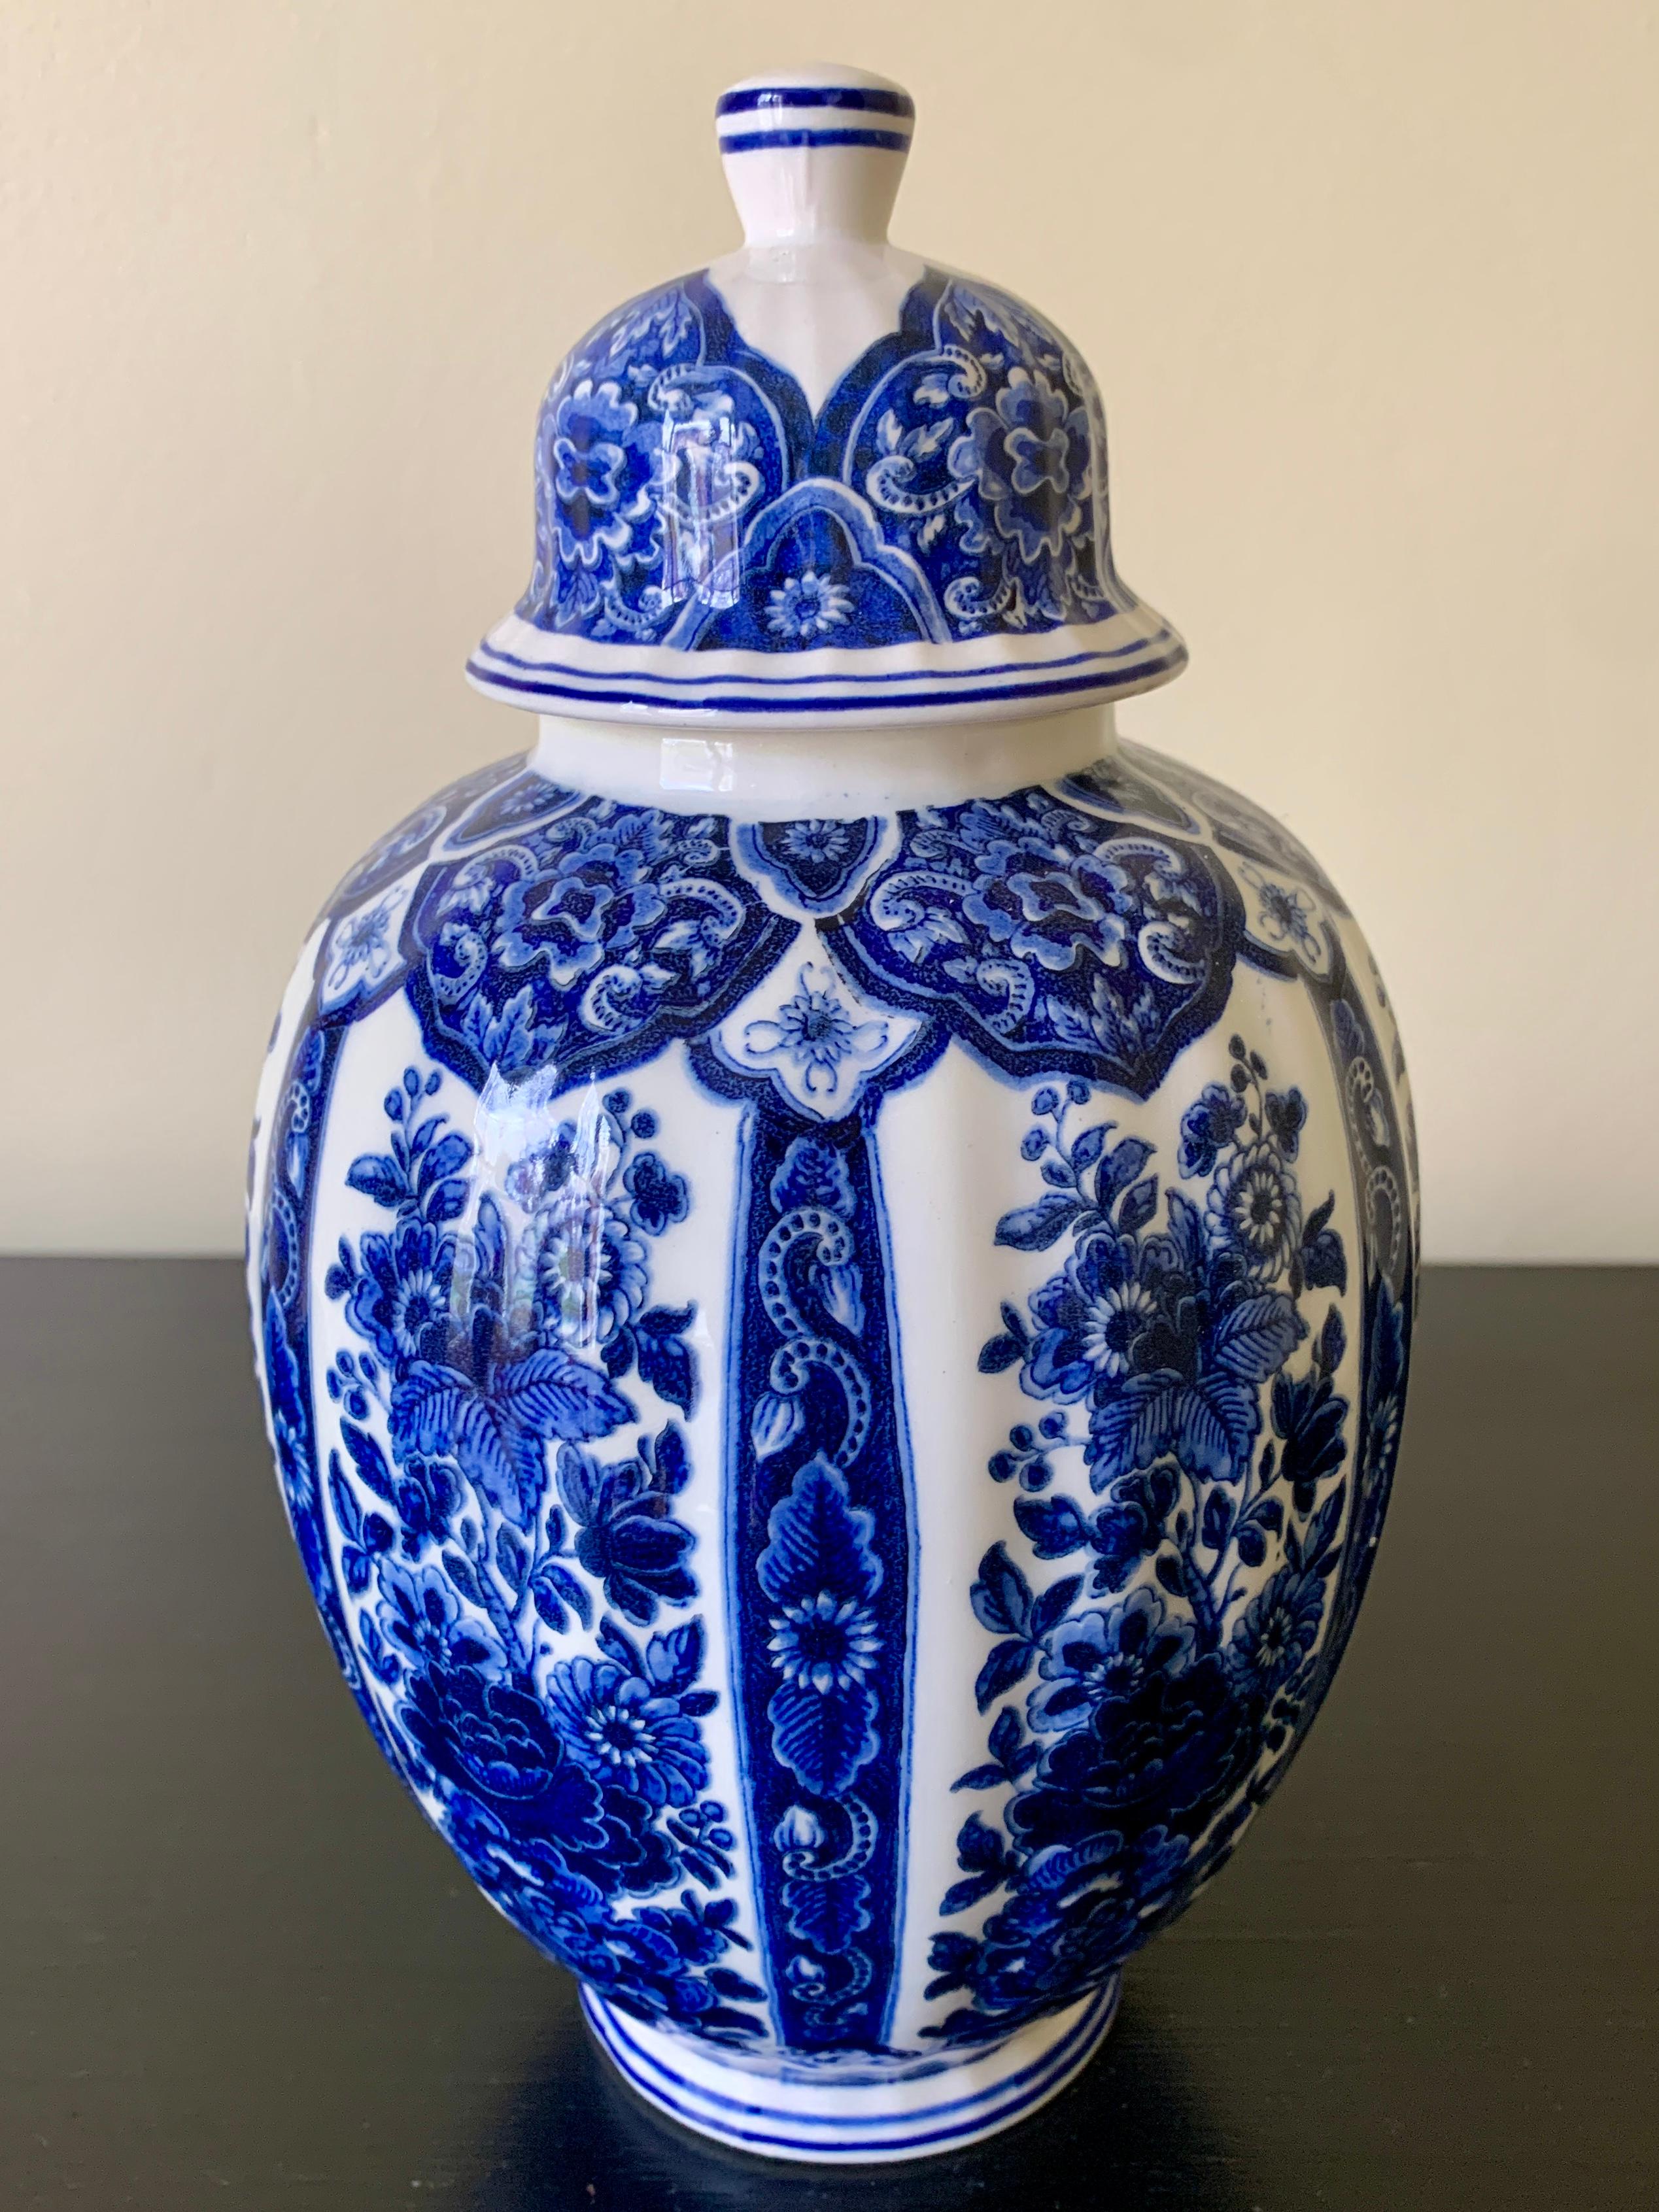 Italian Blue and White Porcelain Ginger Jars by Ardalt Blue Delfia, Pair For Sale 13